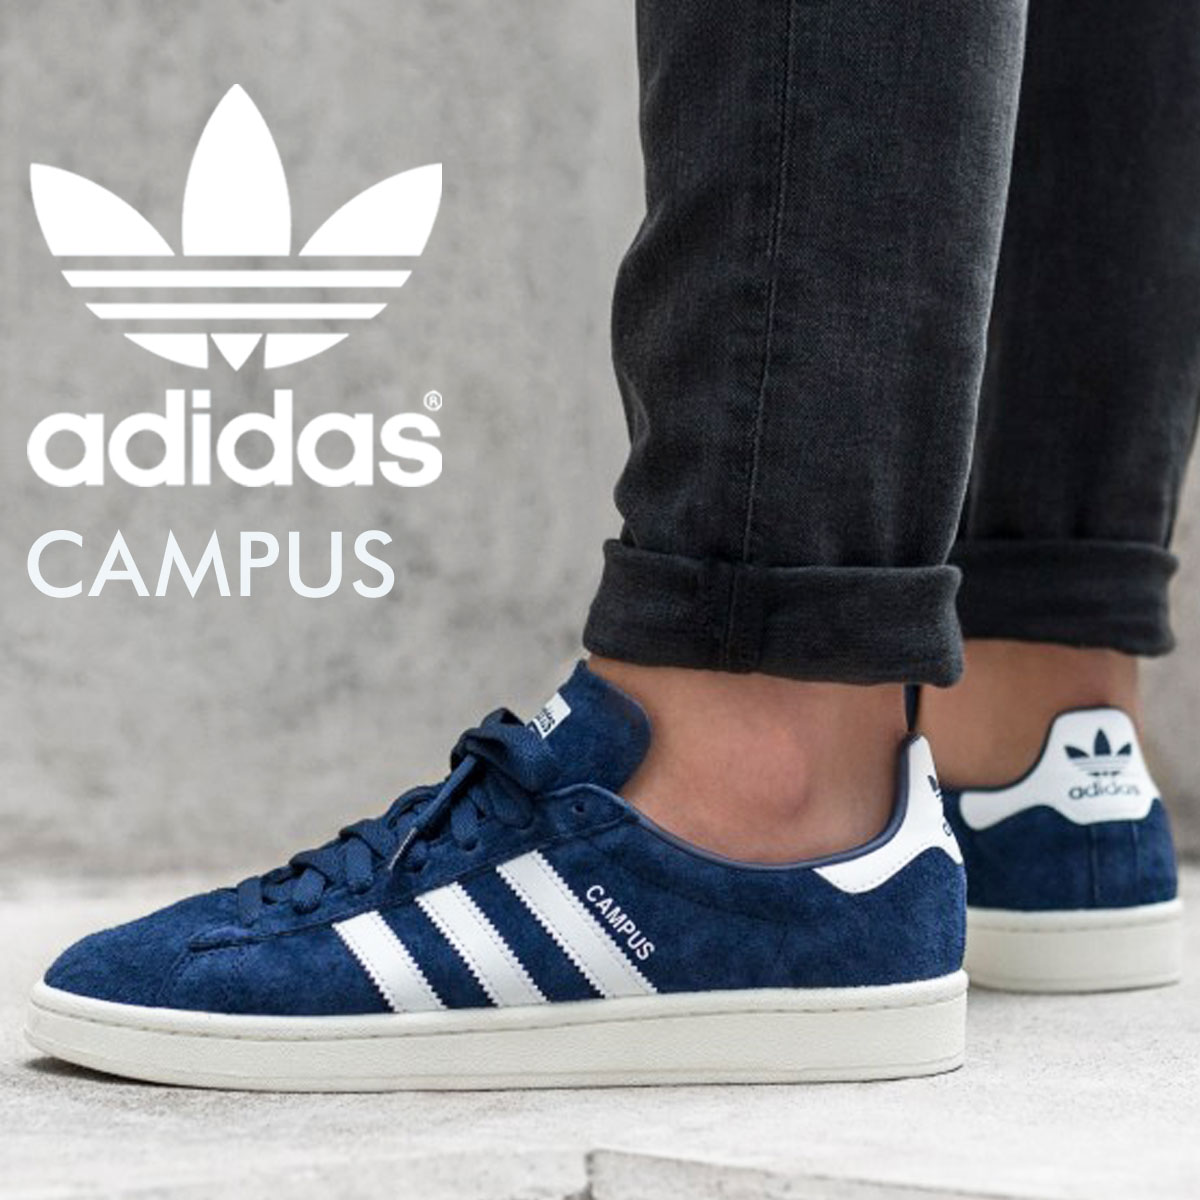 adidas men's campus shoes